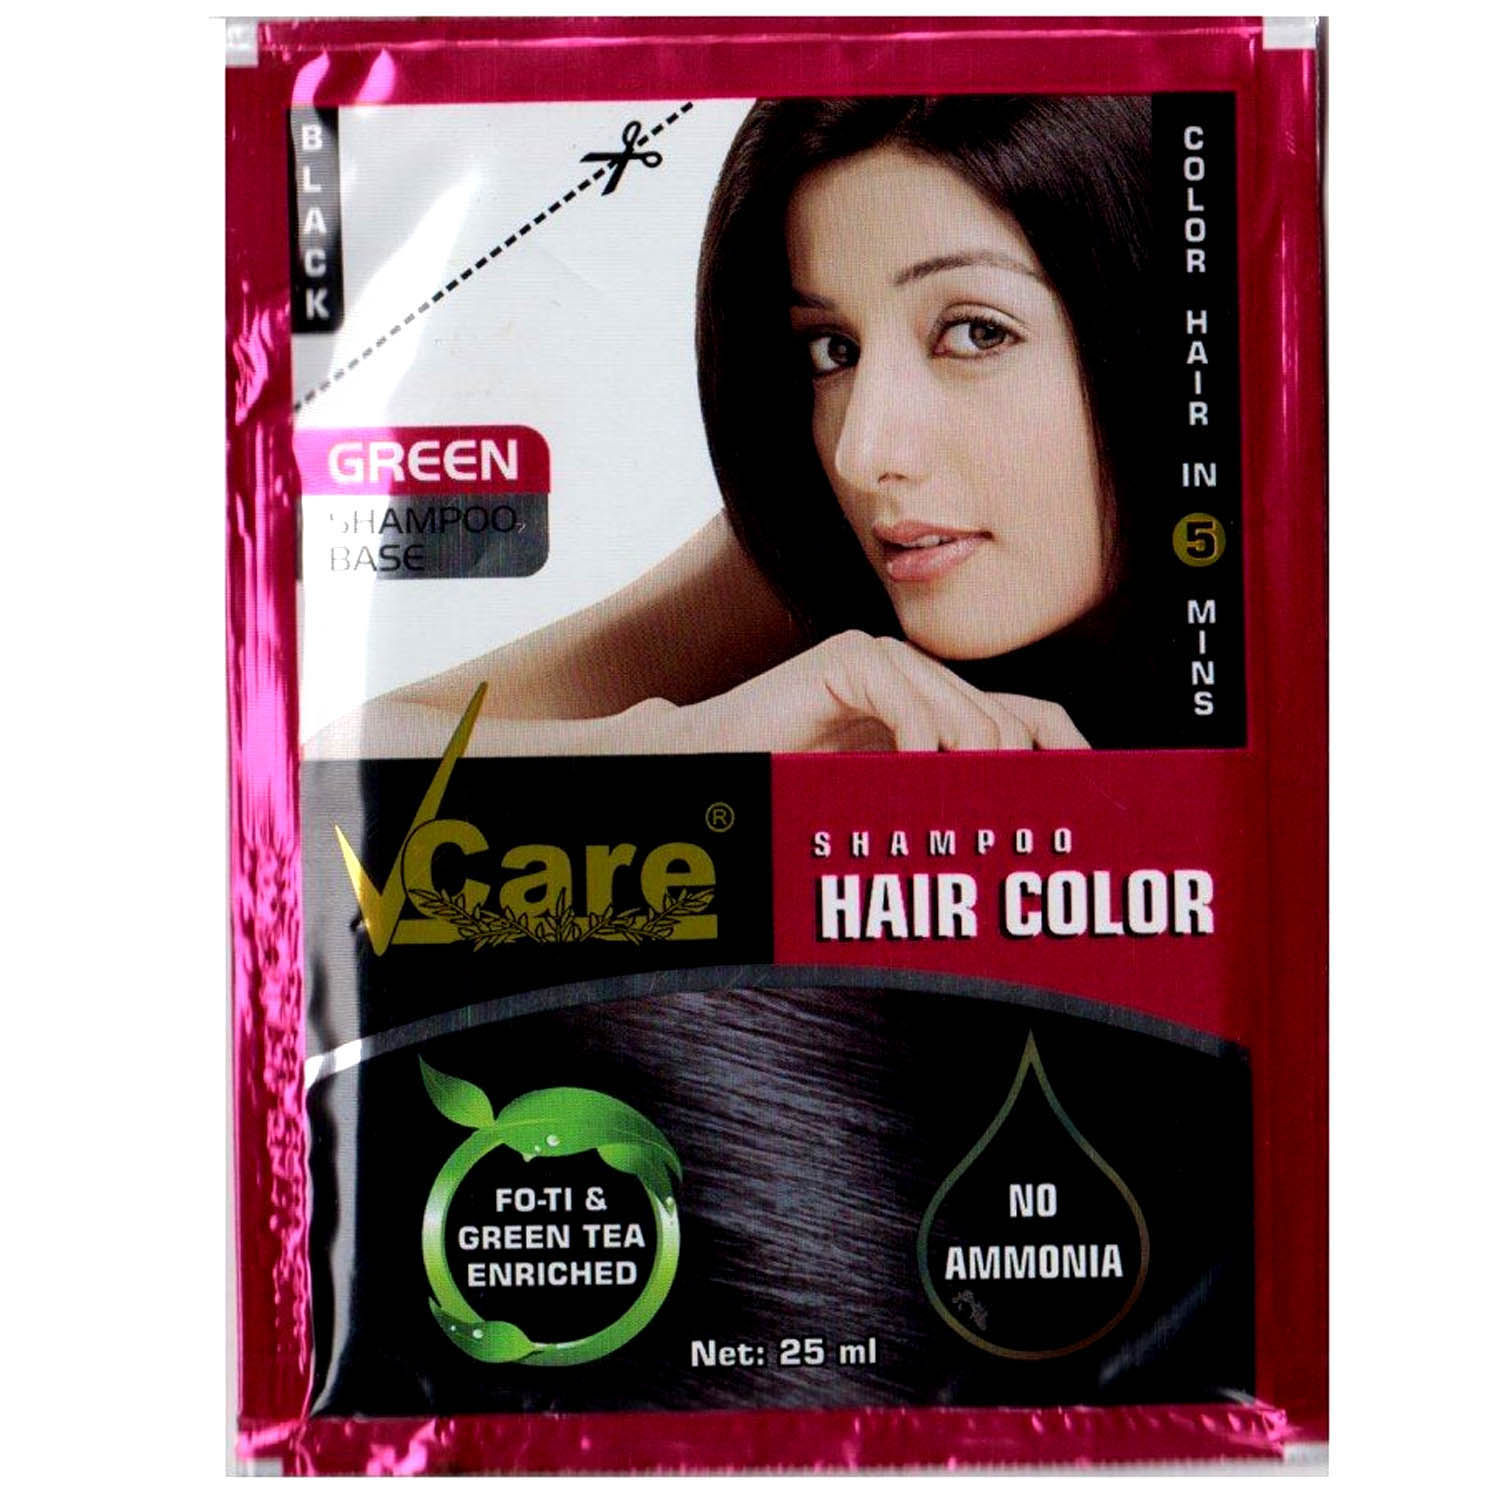 Buy Vcare Shampoo Based Hair Colour Green, 25 ml Online